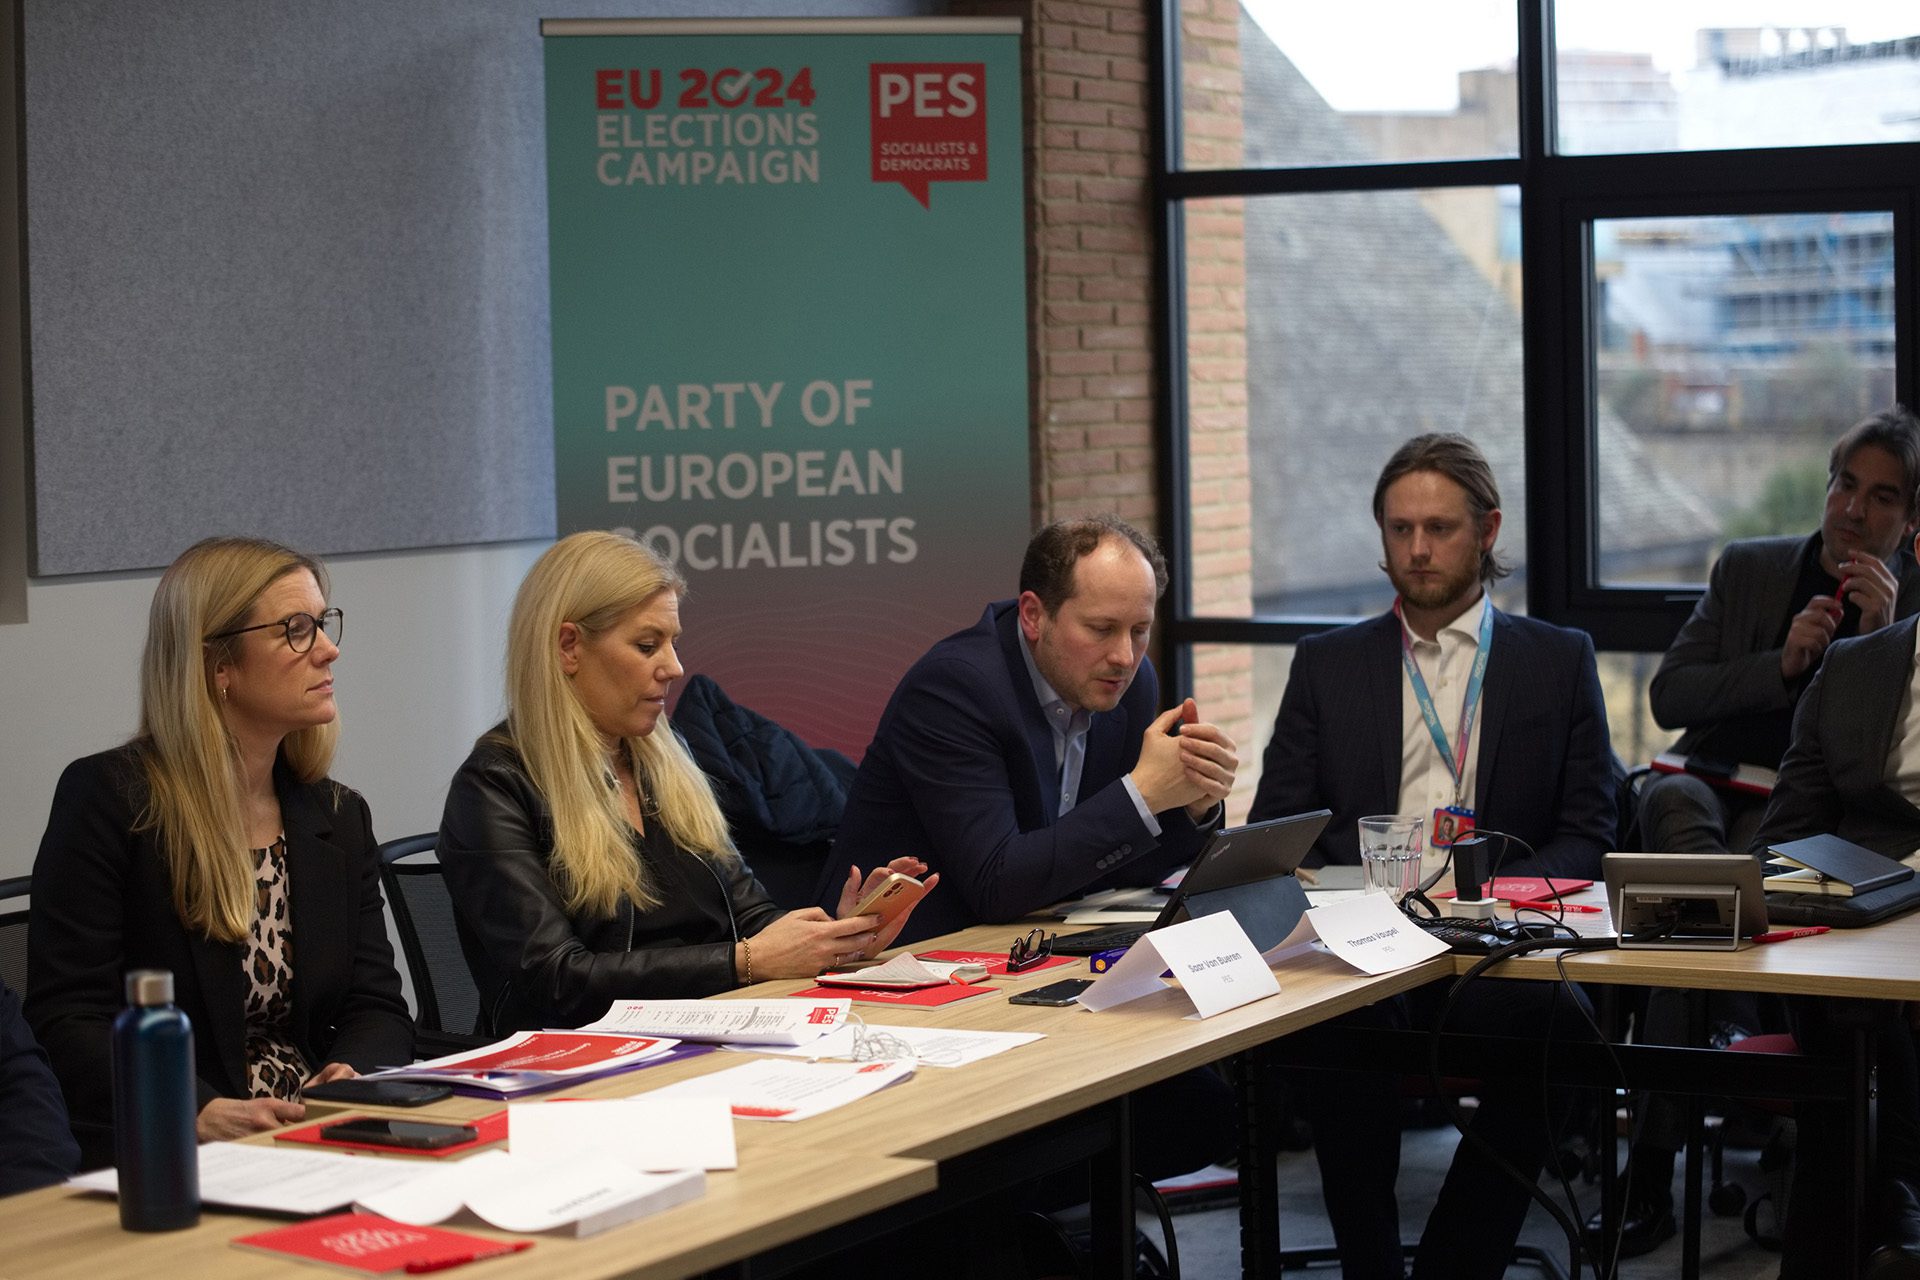 Pictured from left: UK Labour MP Ellie Reeves, PES Deputy Secretary General Saar van Bueren and PES Deputy Secretary General Thomas Vaupel